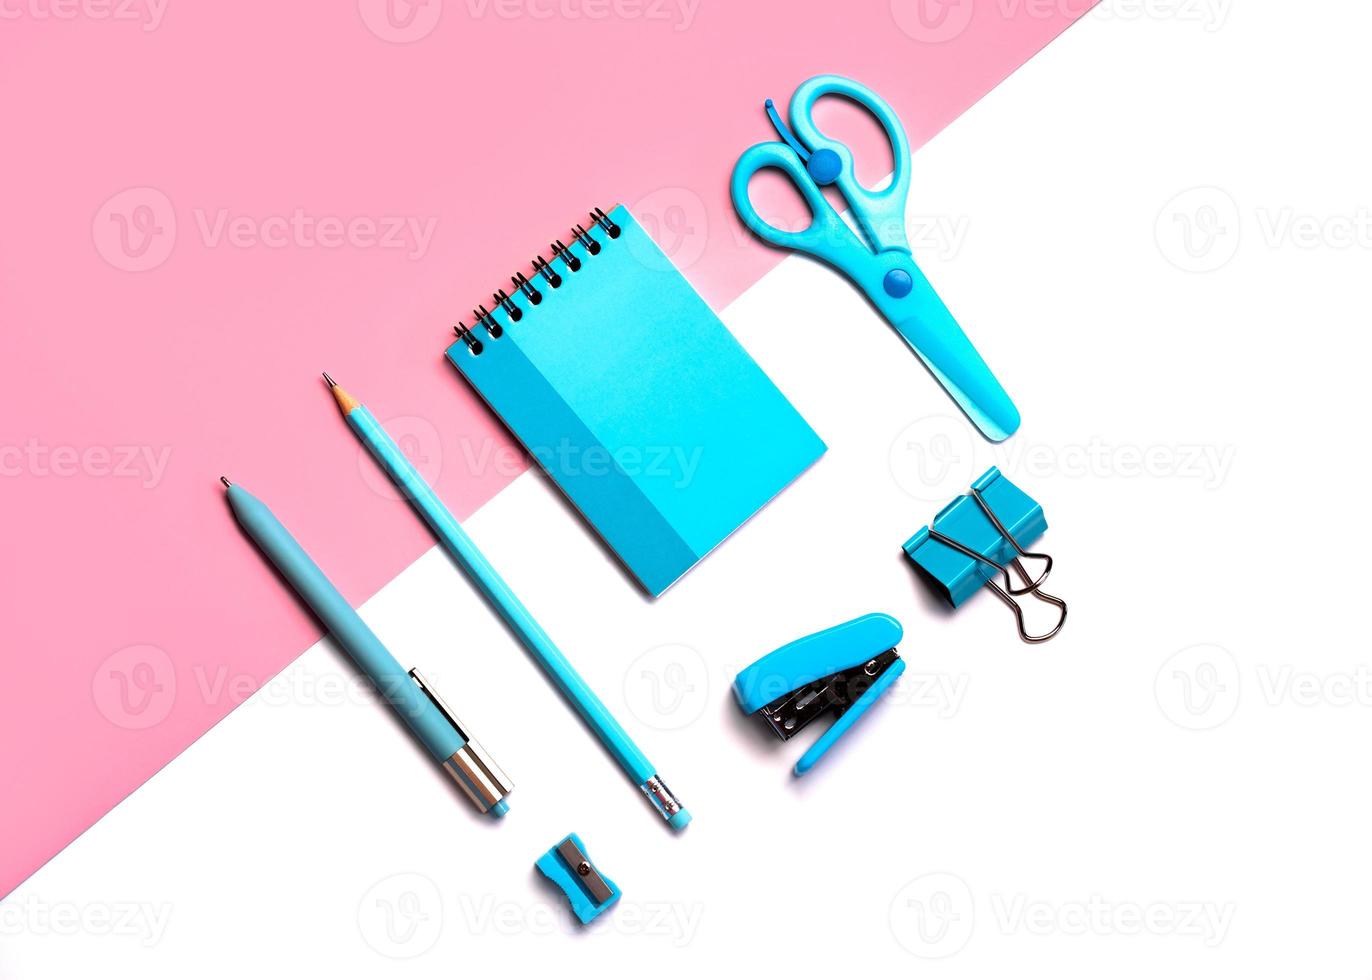 vista superior plana de tijeras, lápiz, clips de papel, grapadora, sacapuntas, bolígrafo con bloc de notas azul.concepto de papelería escolar foto